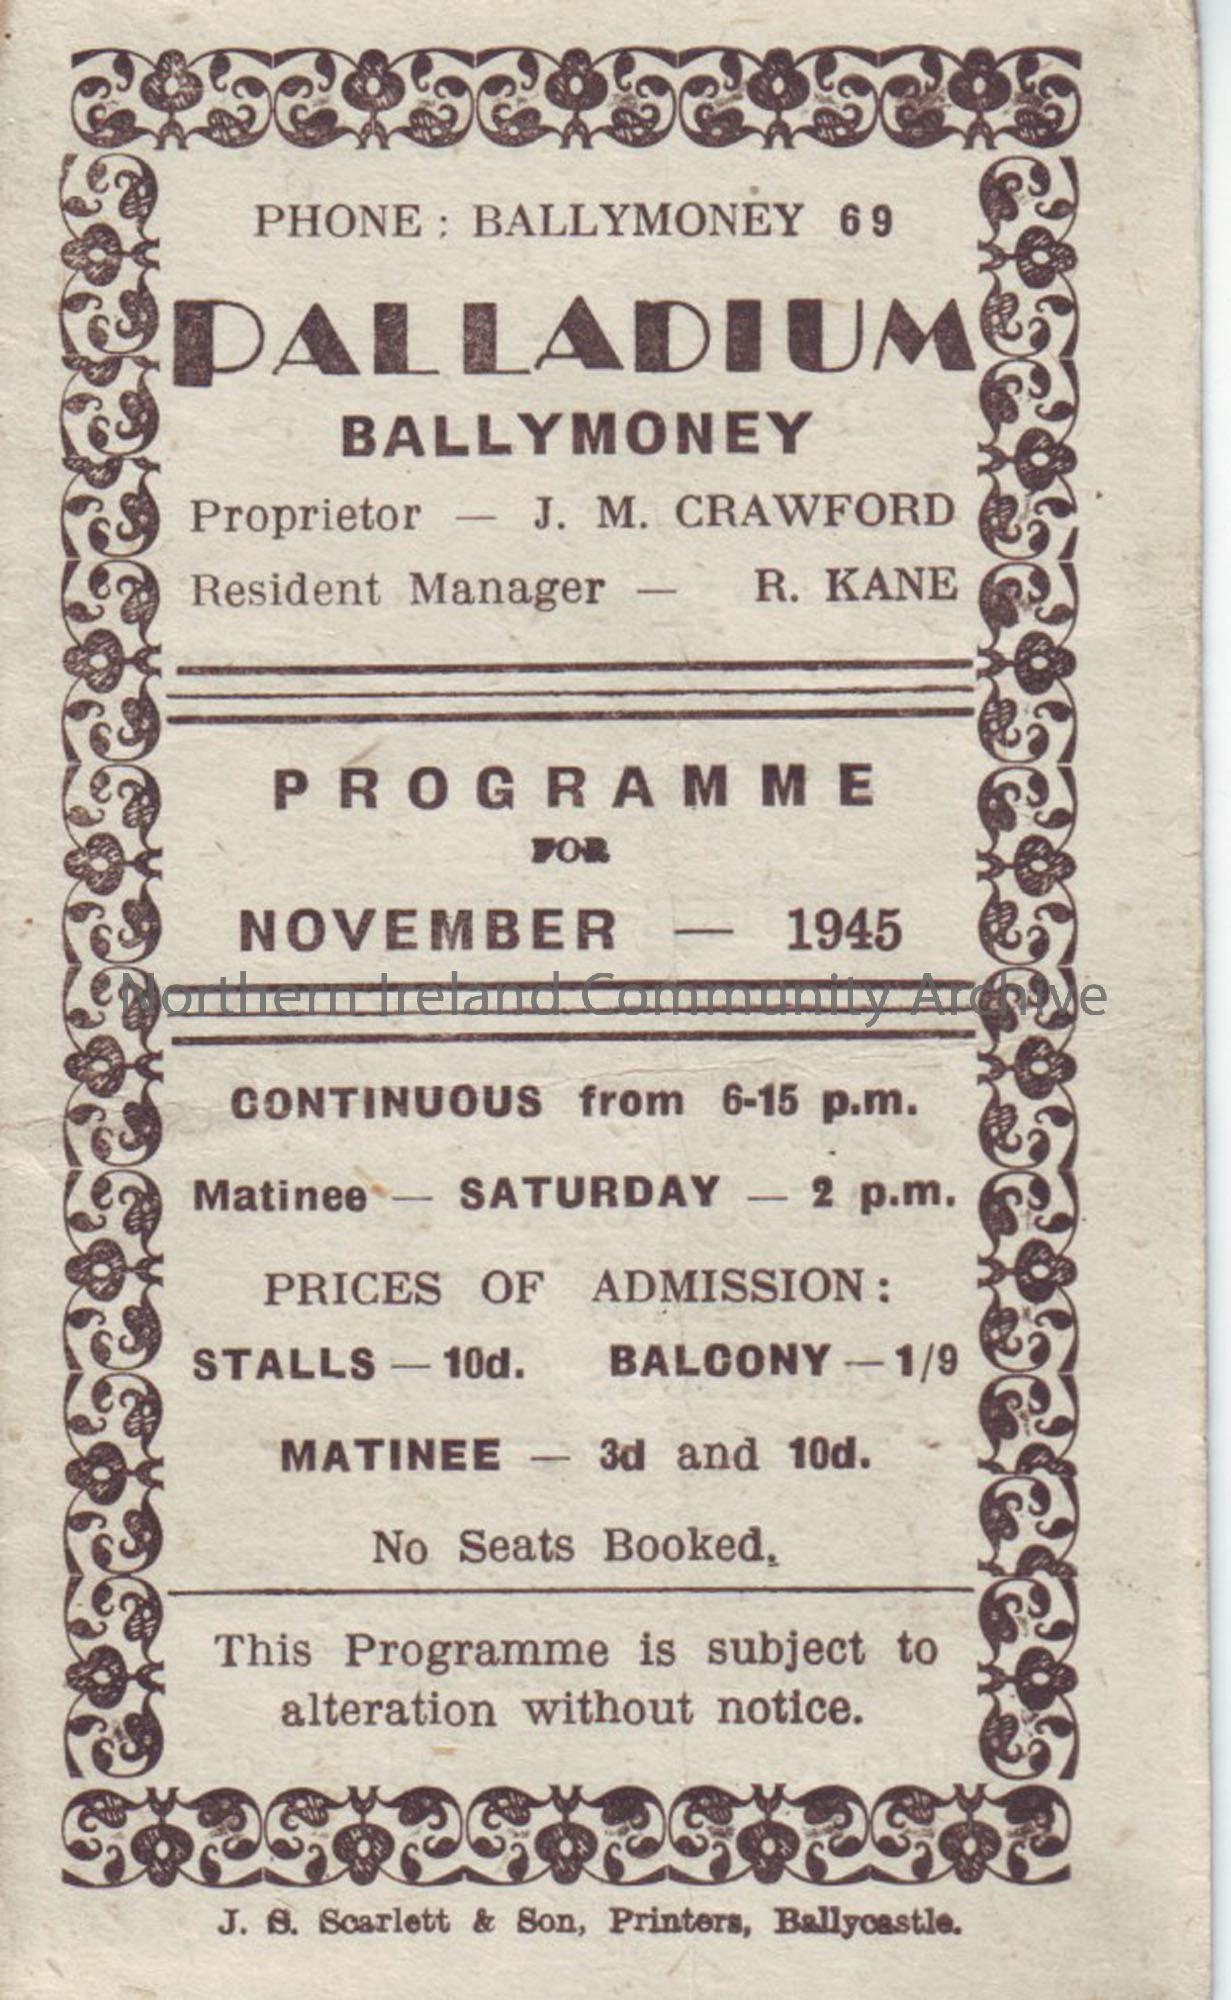 cream programme for Ballymoney Palladium cinema- November 1945